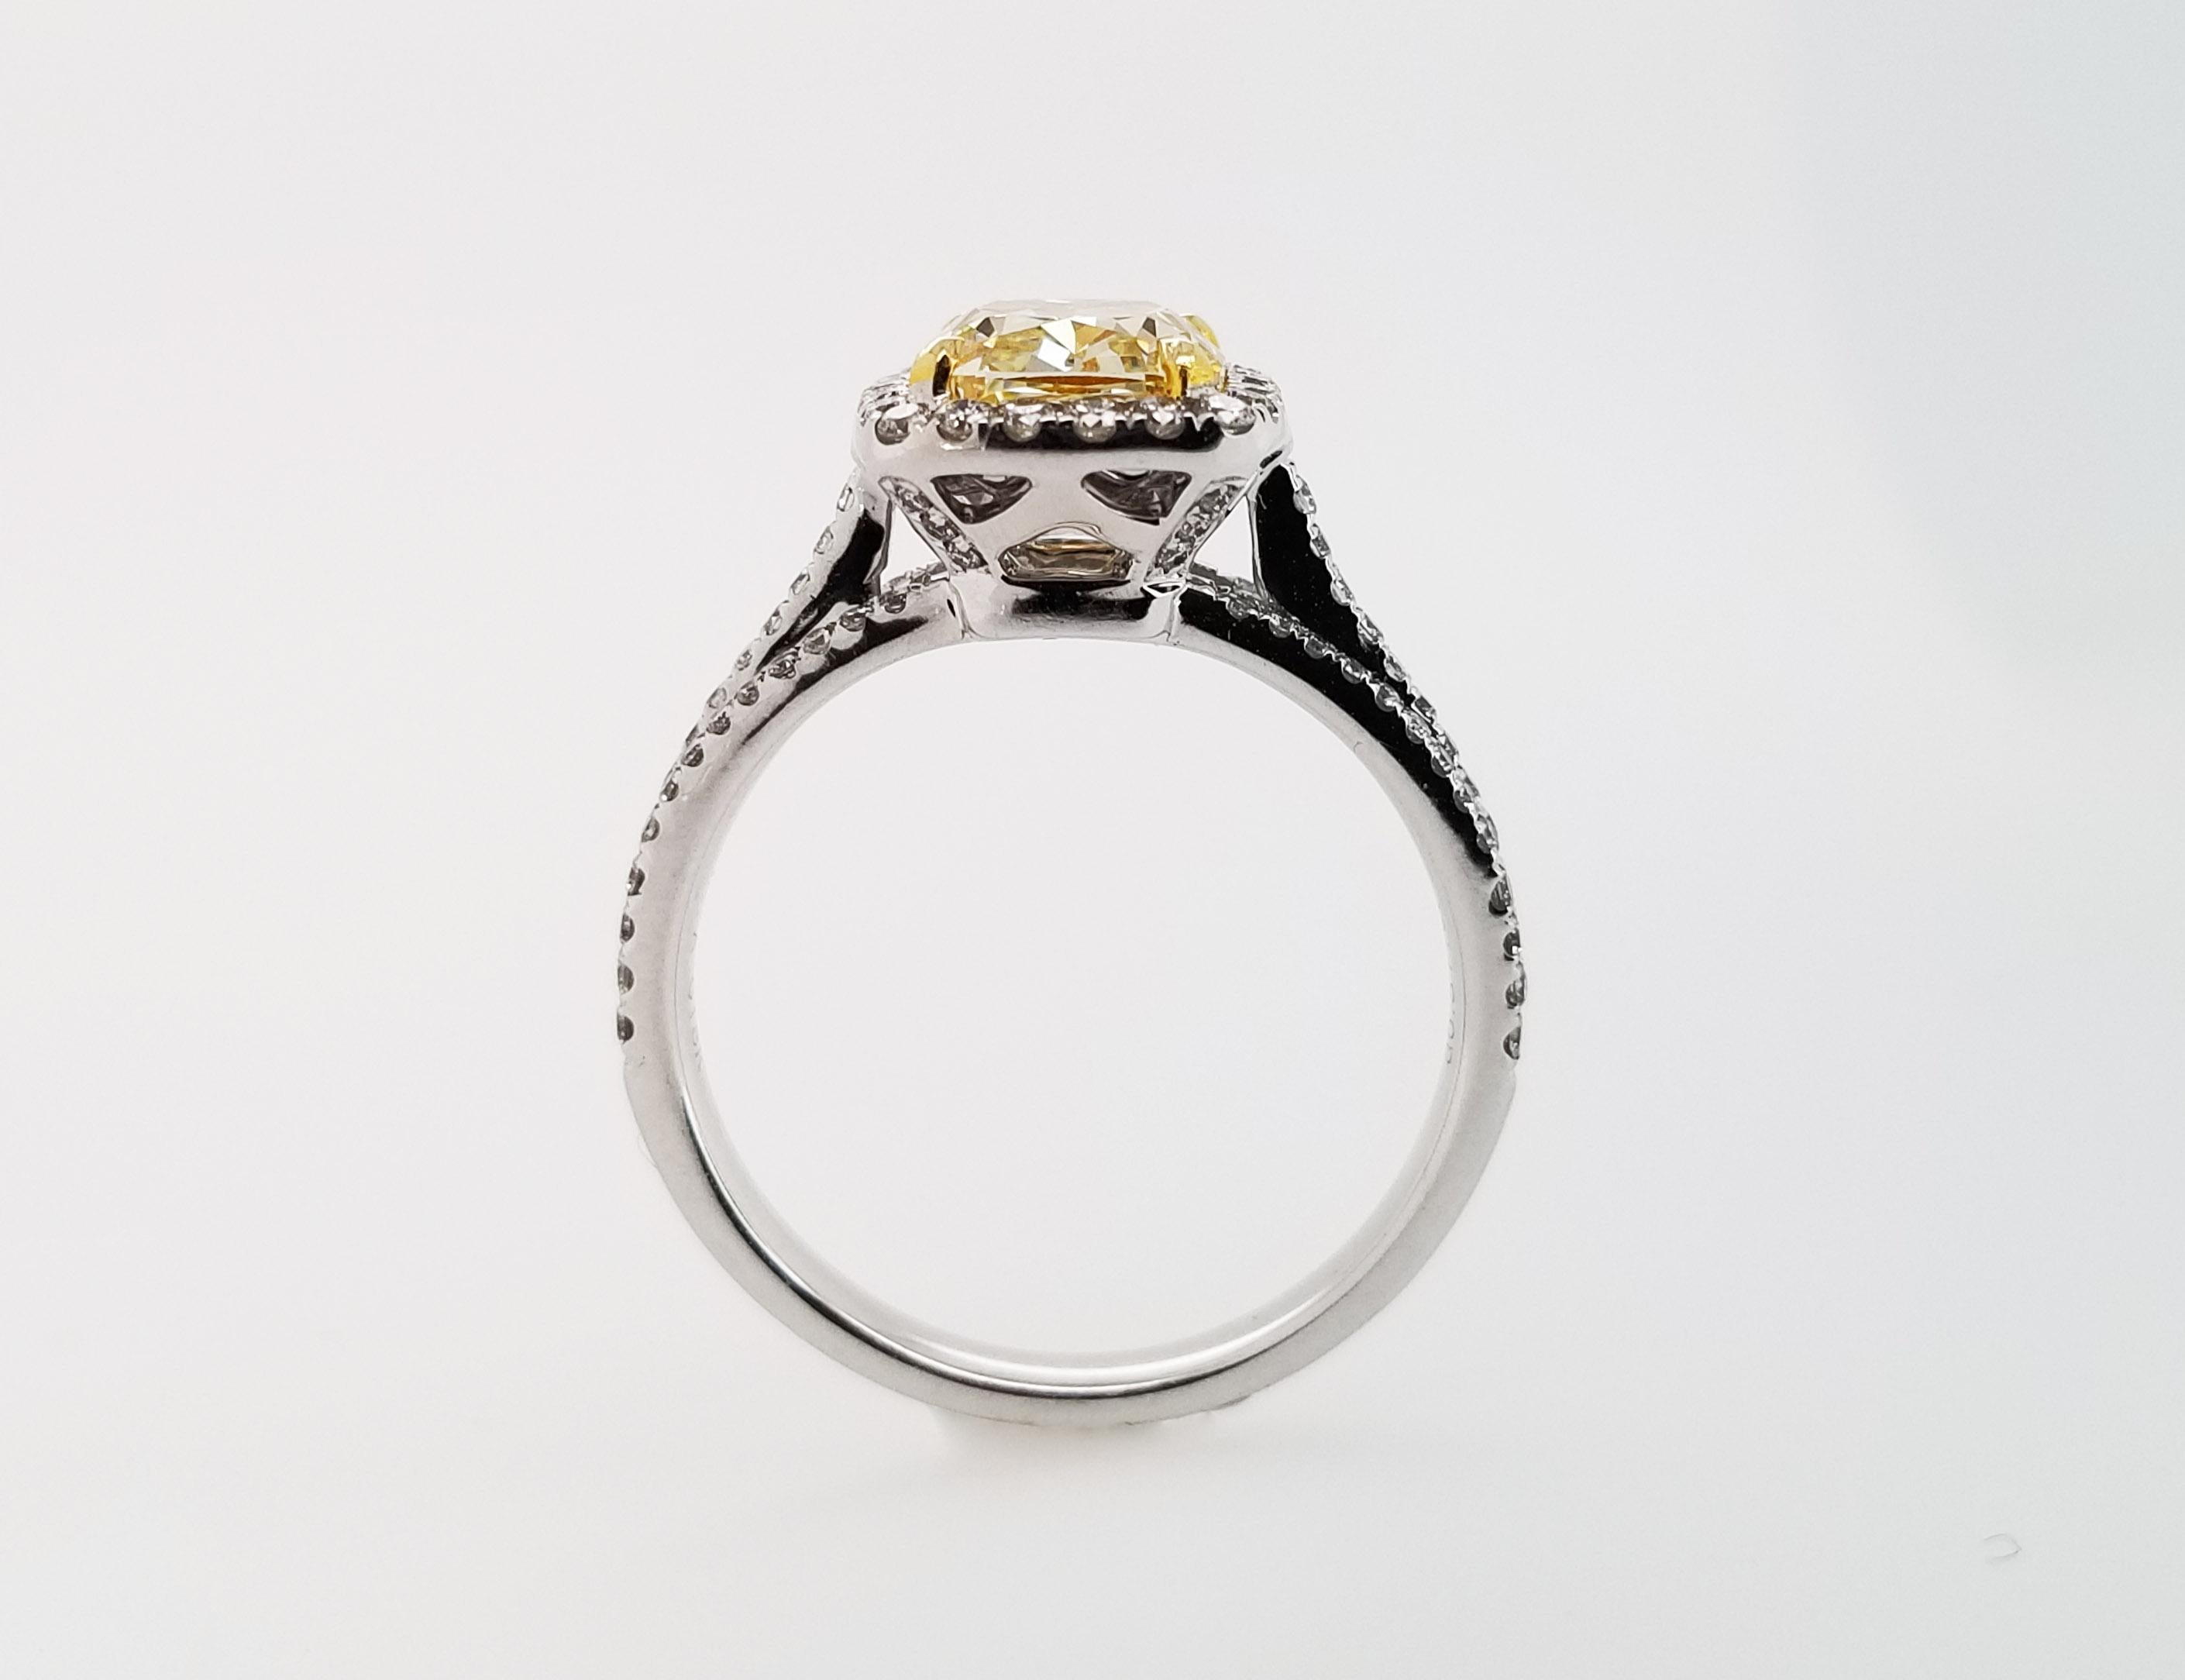 Scarselli GIA 2 Cushion Cut Fancy Yellow Diamond Engagement Ring in 18 Karat 4